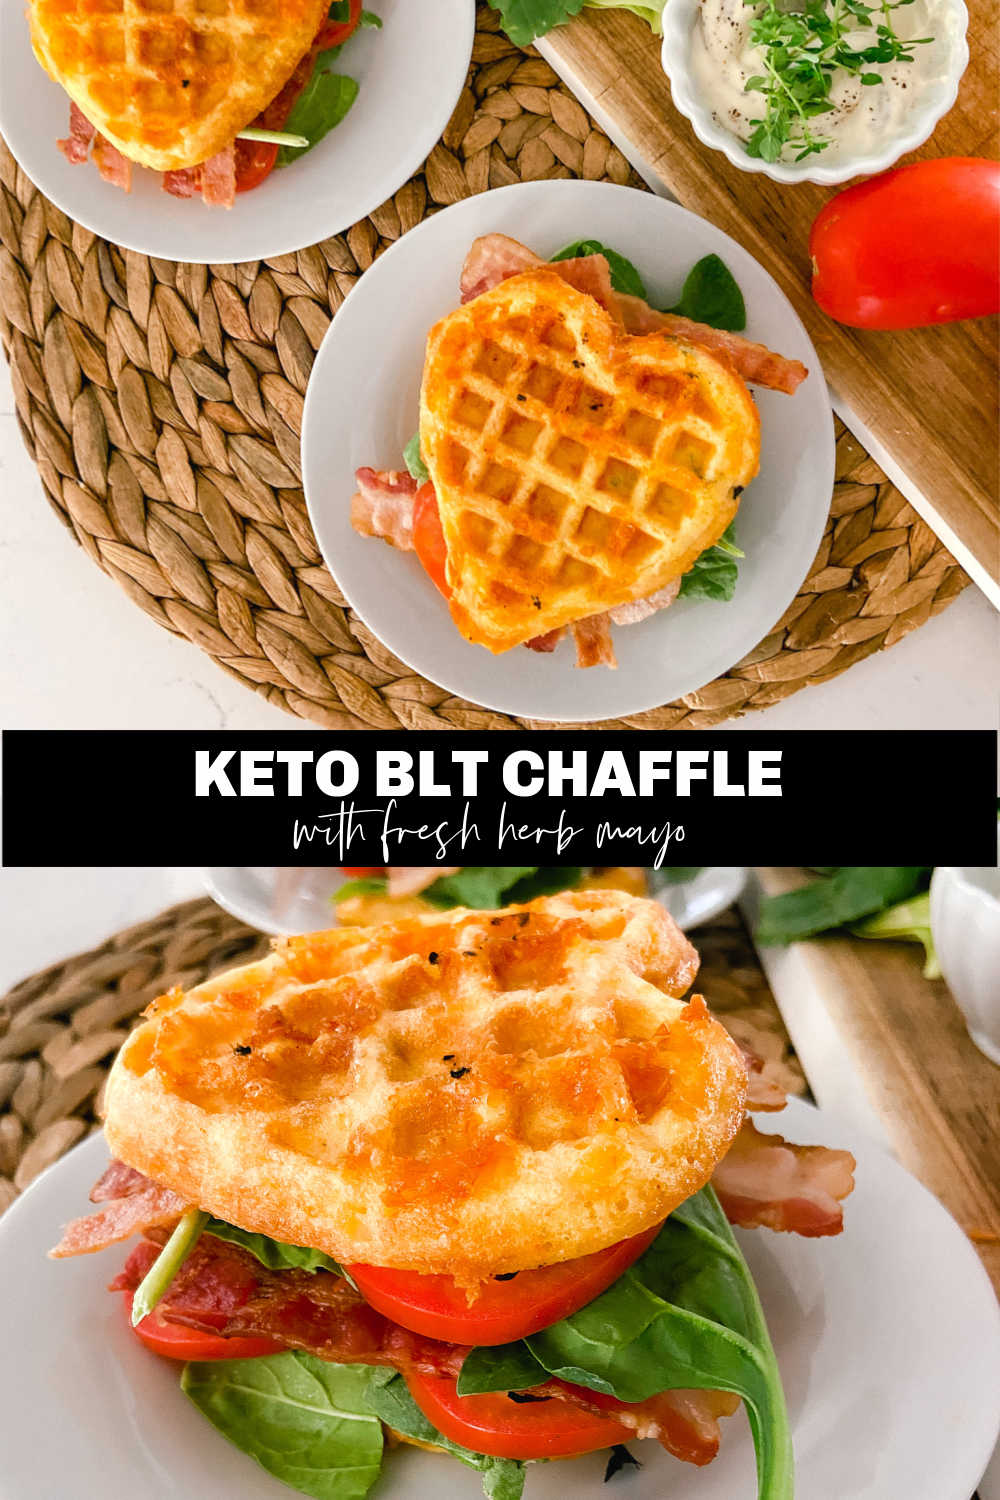 Keto Chaffle BLT Sandwich with herb mayo